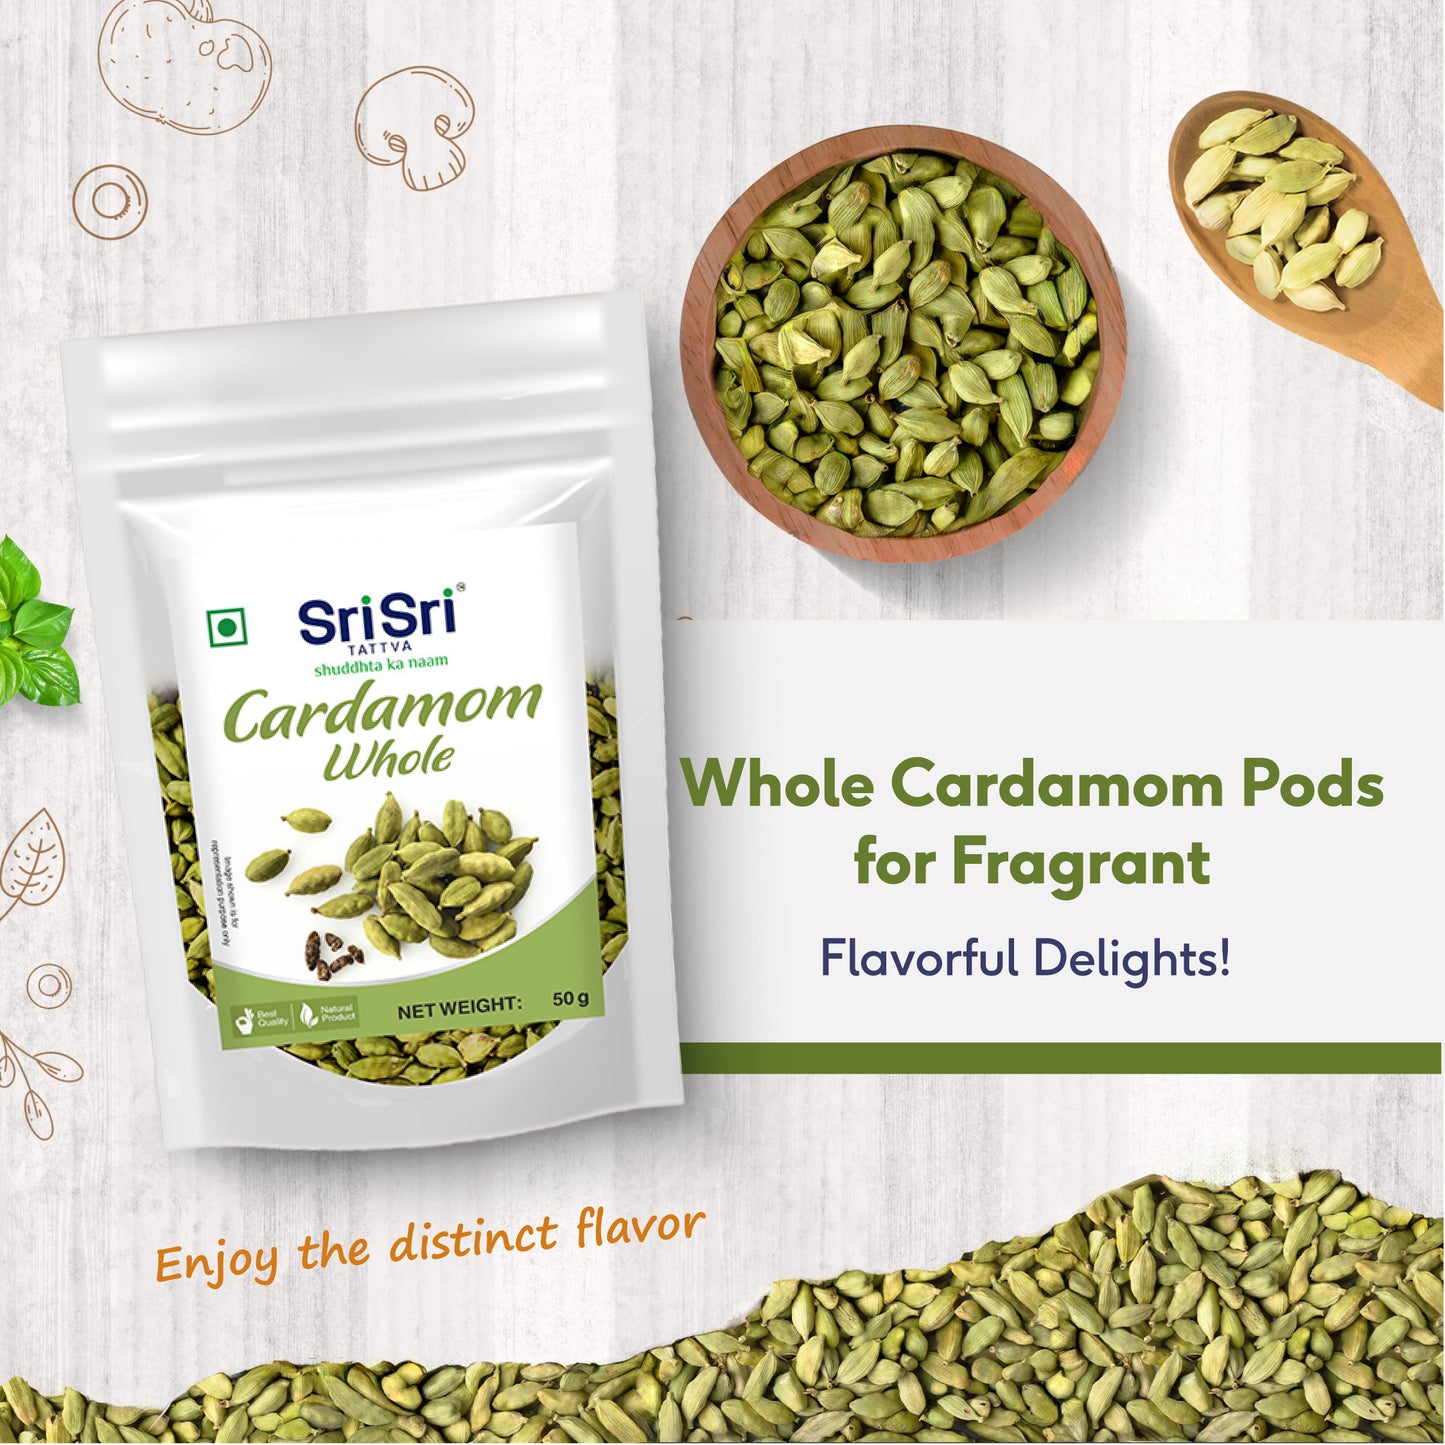 Organic Cardamom Green (Elaichi), 50 g